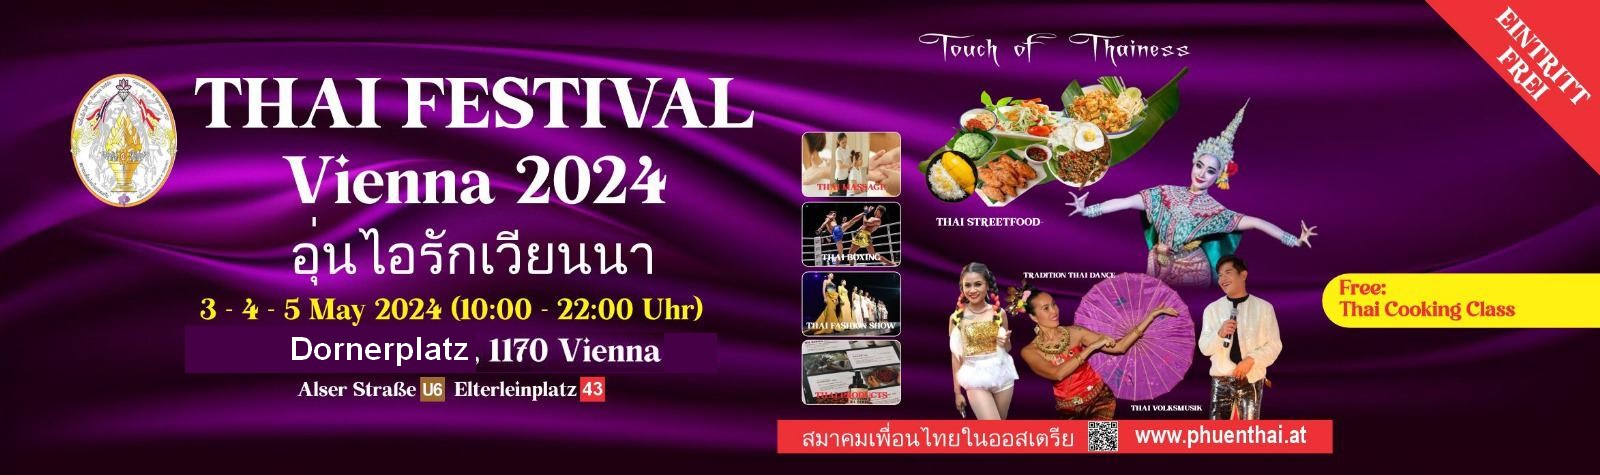 Thailand Fabulous Summer Festival 2023 Bilder - phuenthai.at